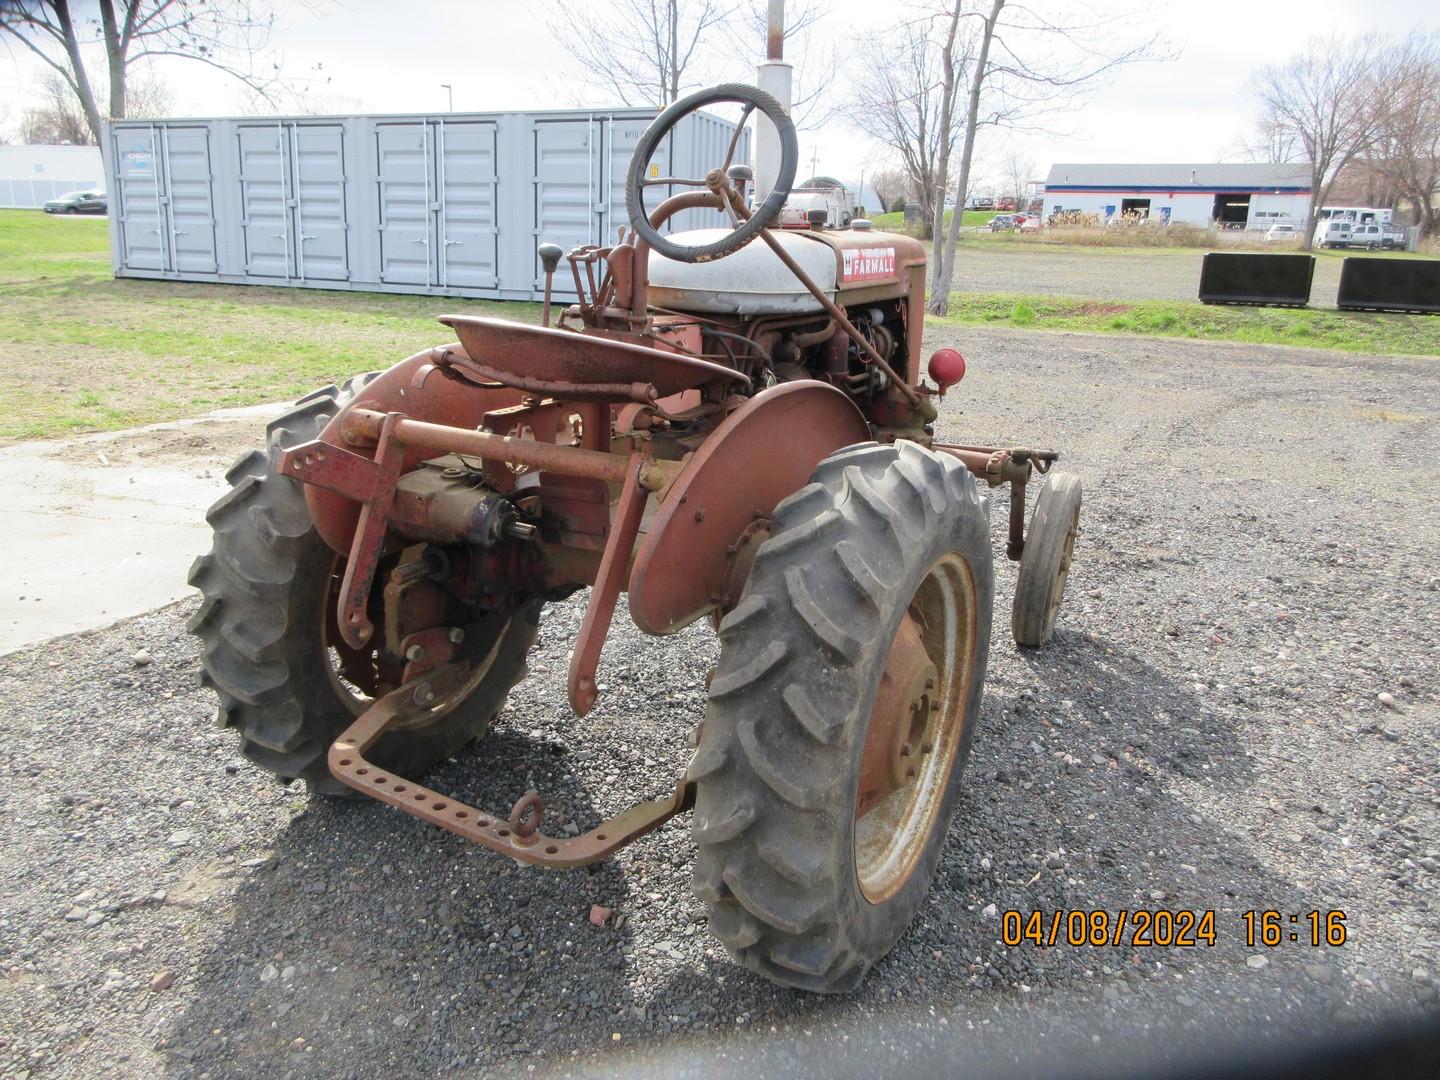 Farmall Super A Antique AG Tractor